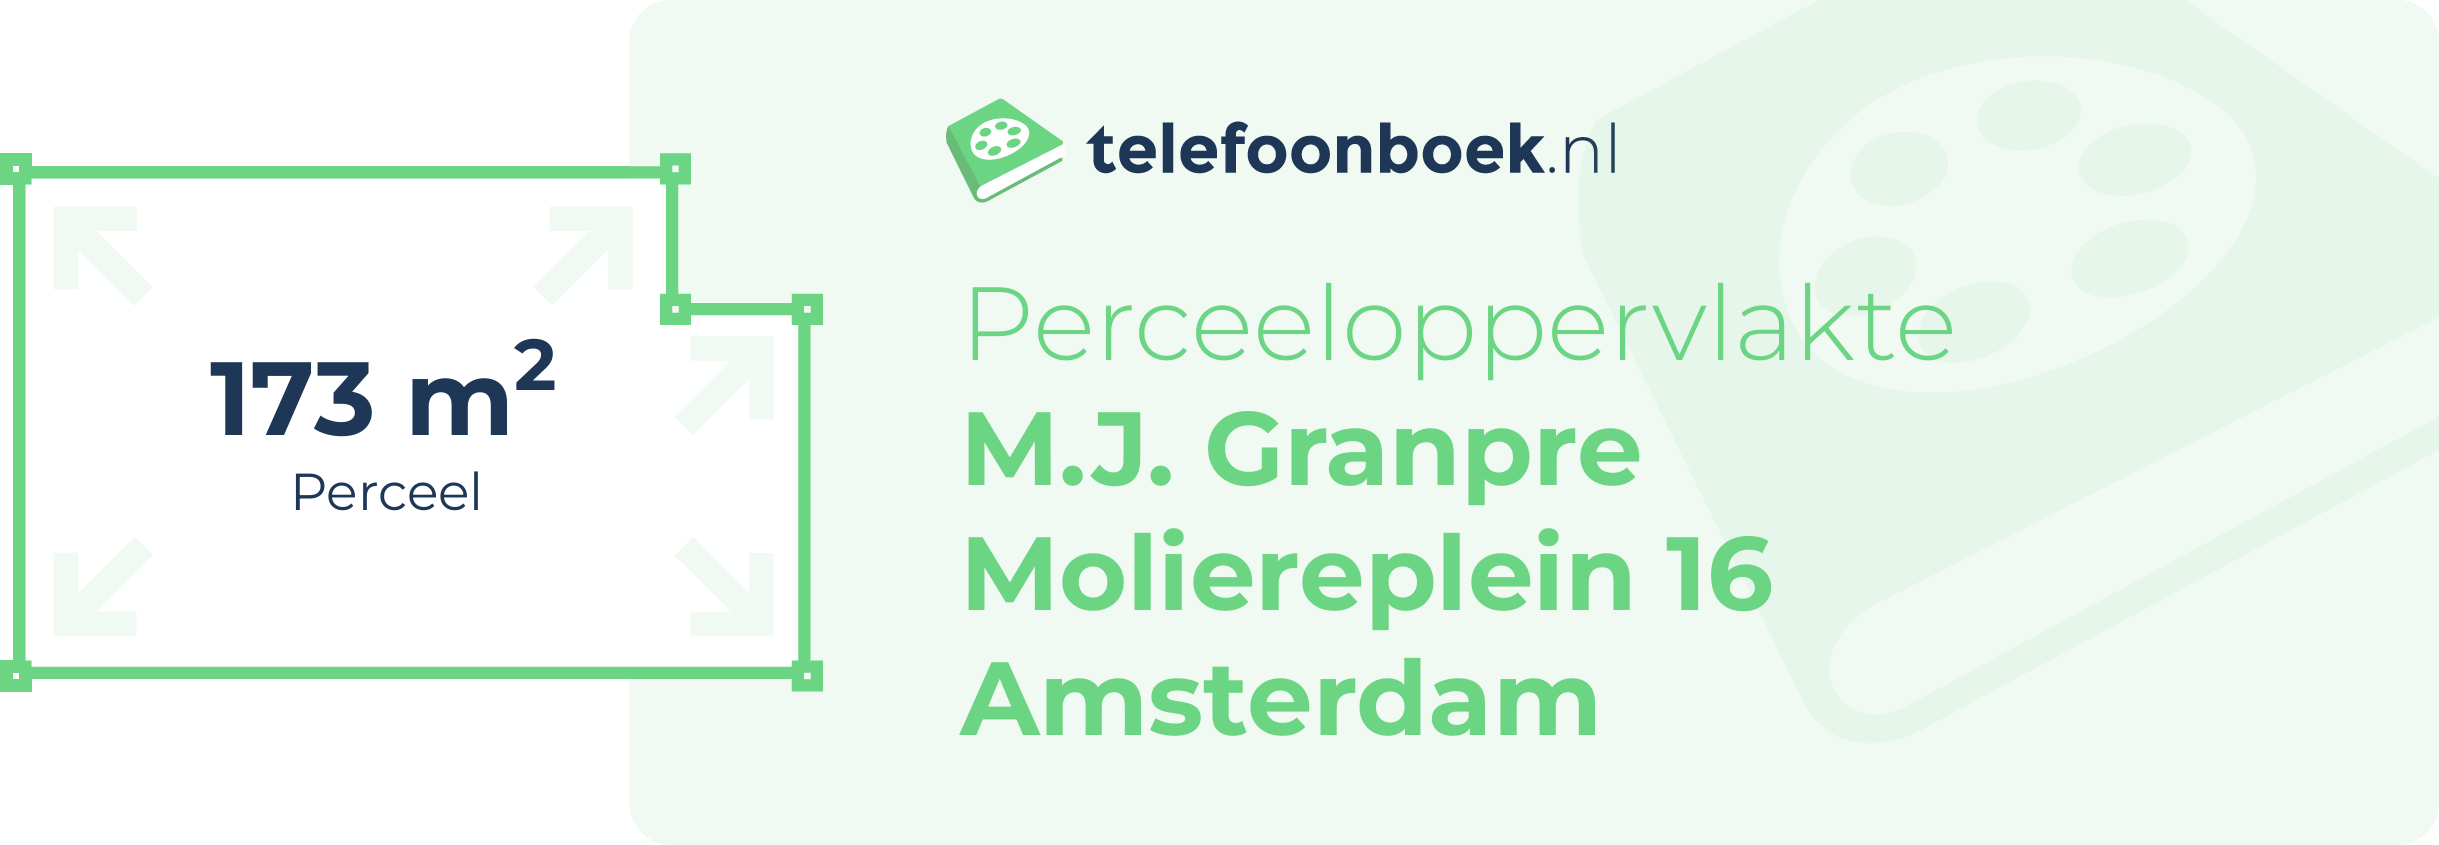 Perceeloppervlakte M.J. Granpre Moliereplein 16 Amsterdam